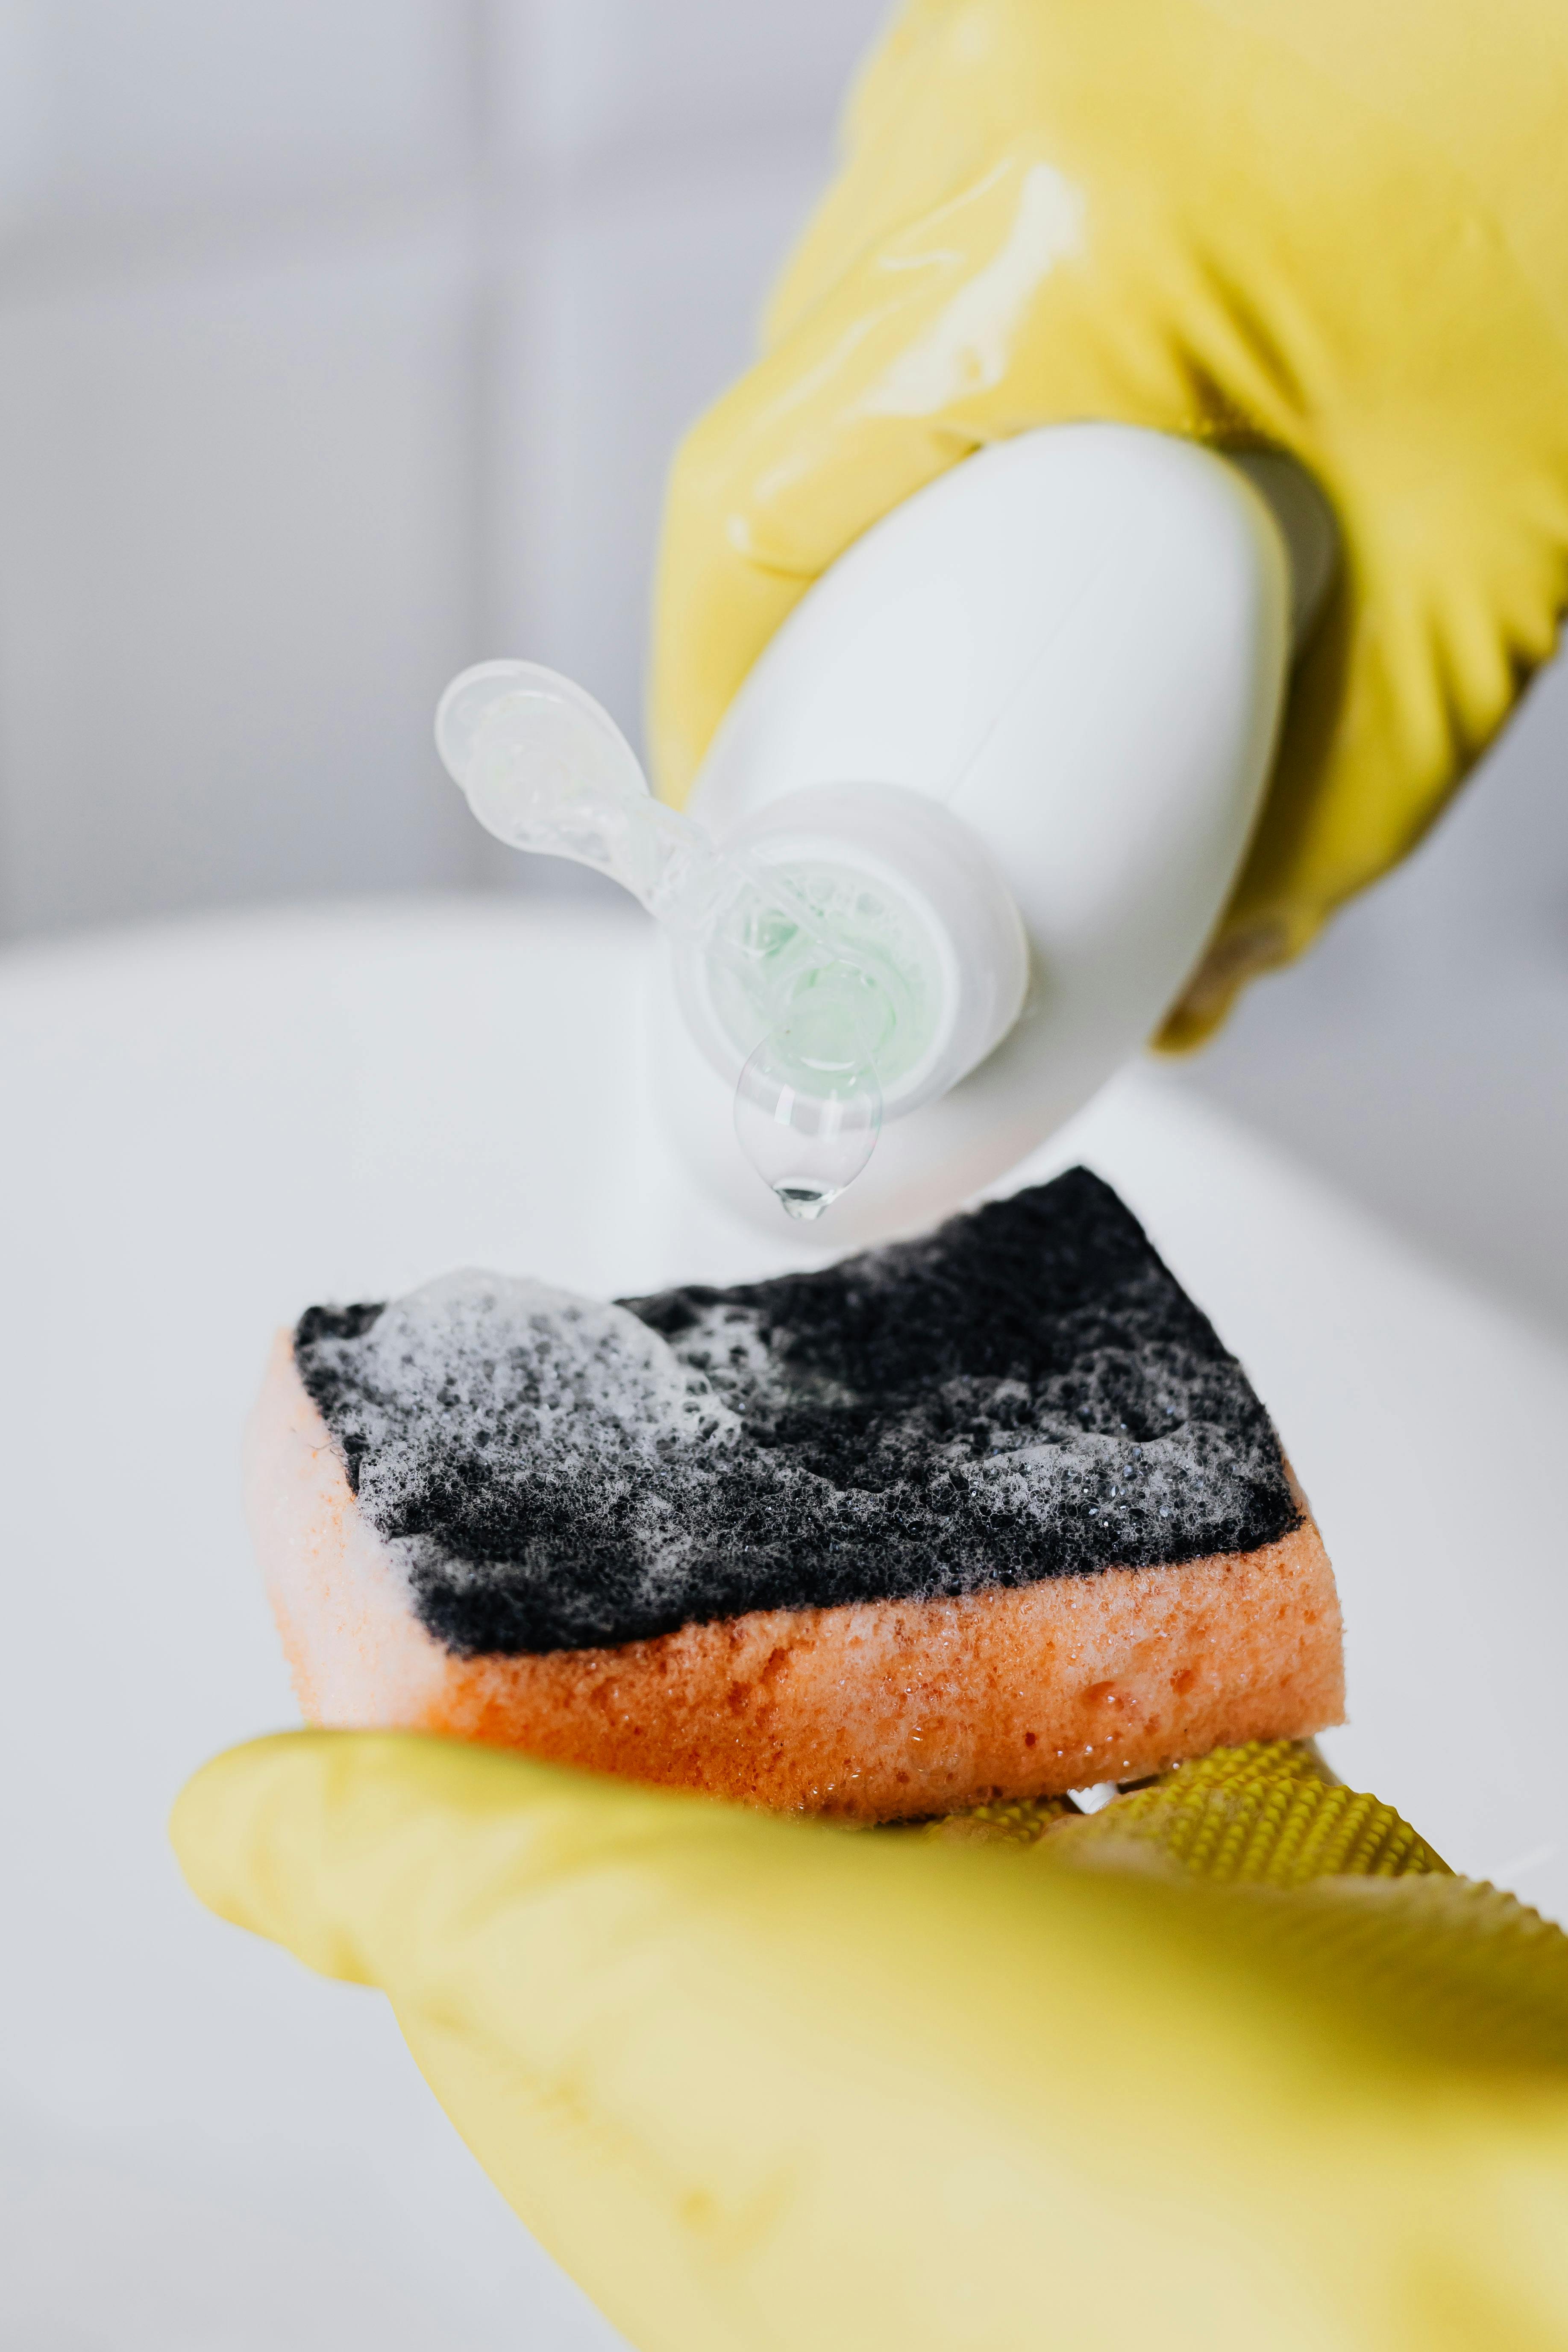 A person pouring dish soap onto a sponge | Source: Pexels